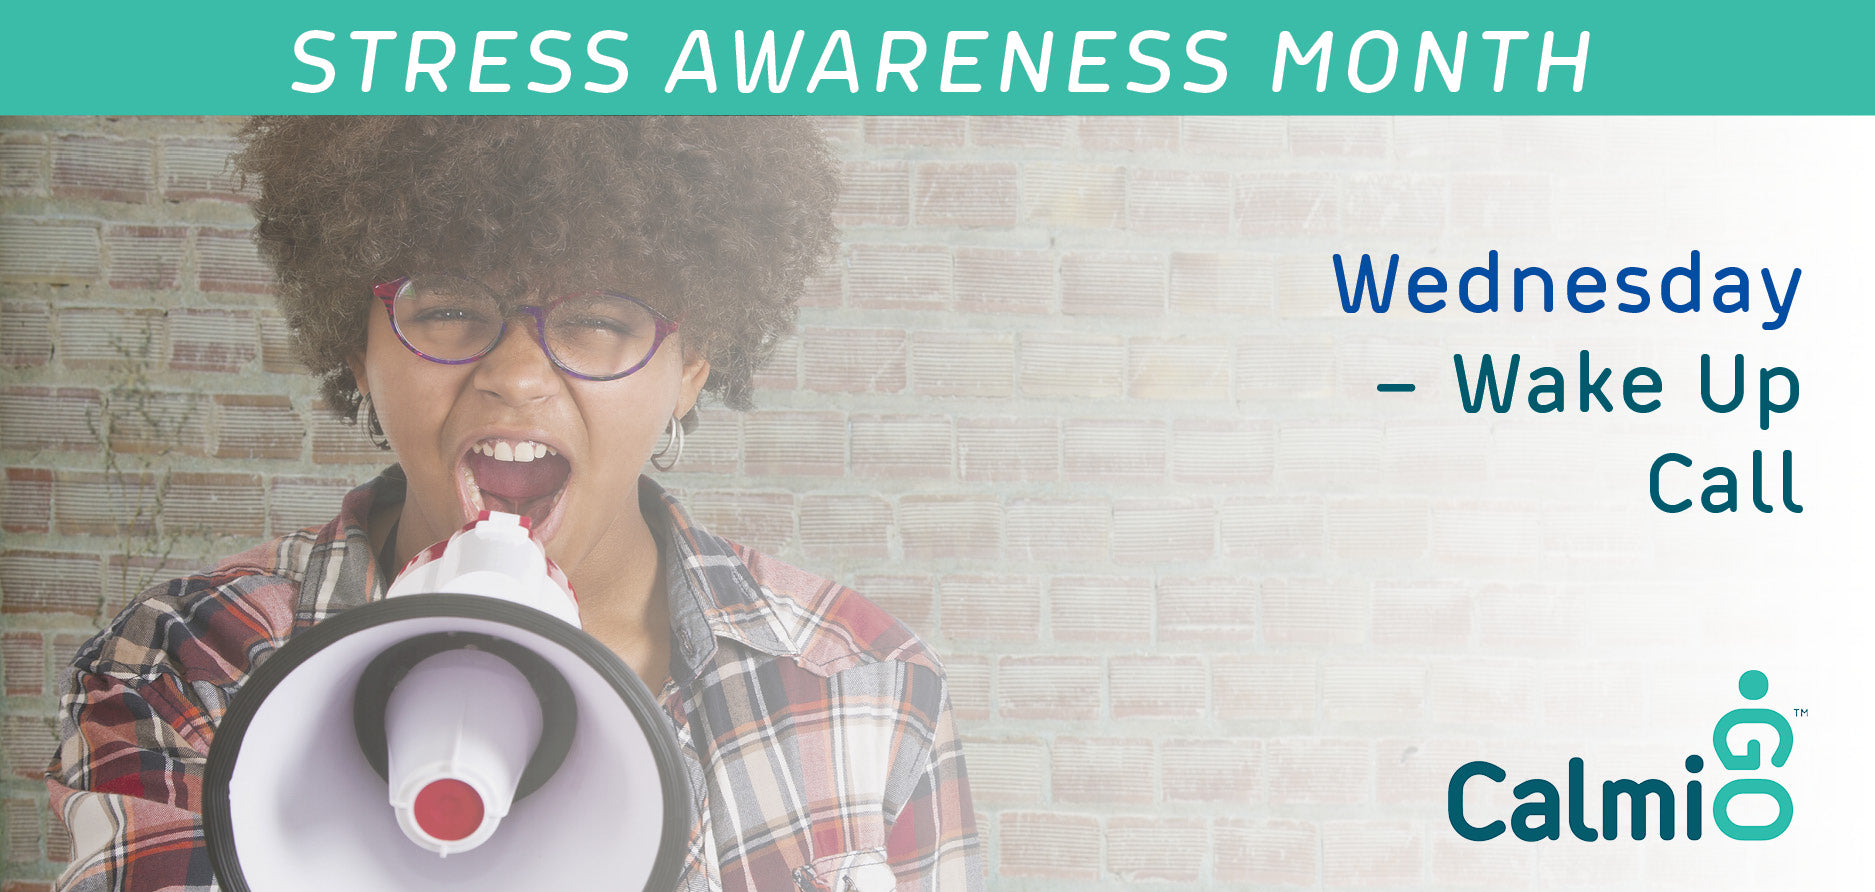 April 3 – Stress Awareness Month - Wednesday Wake Up Call